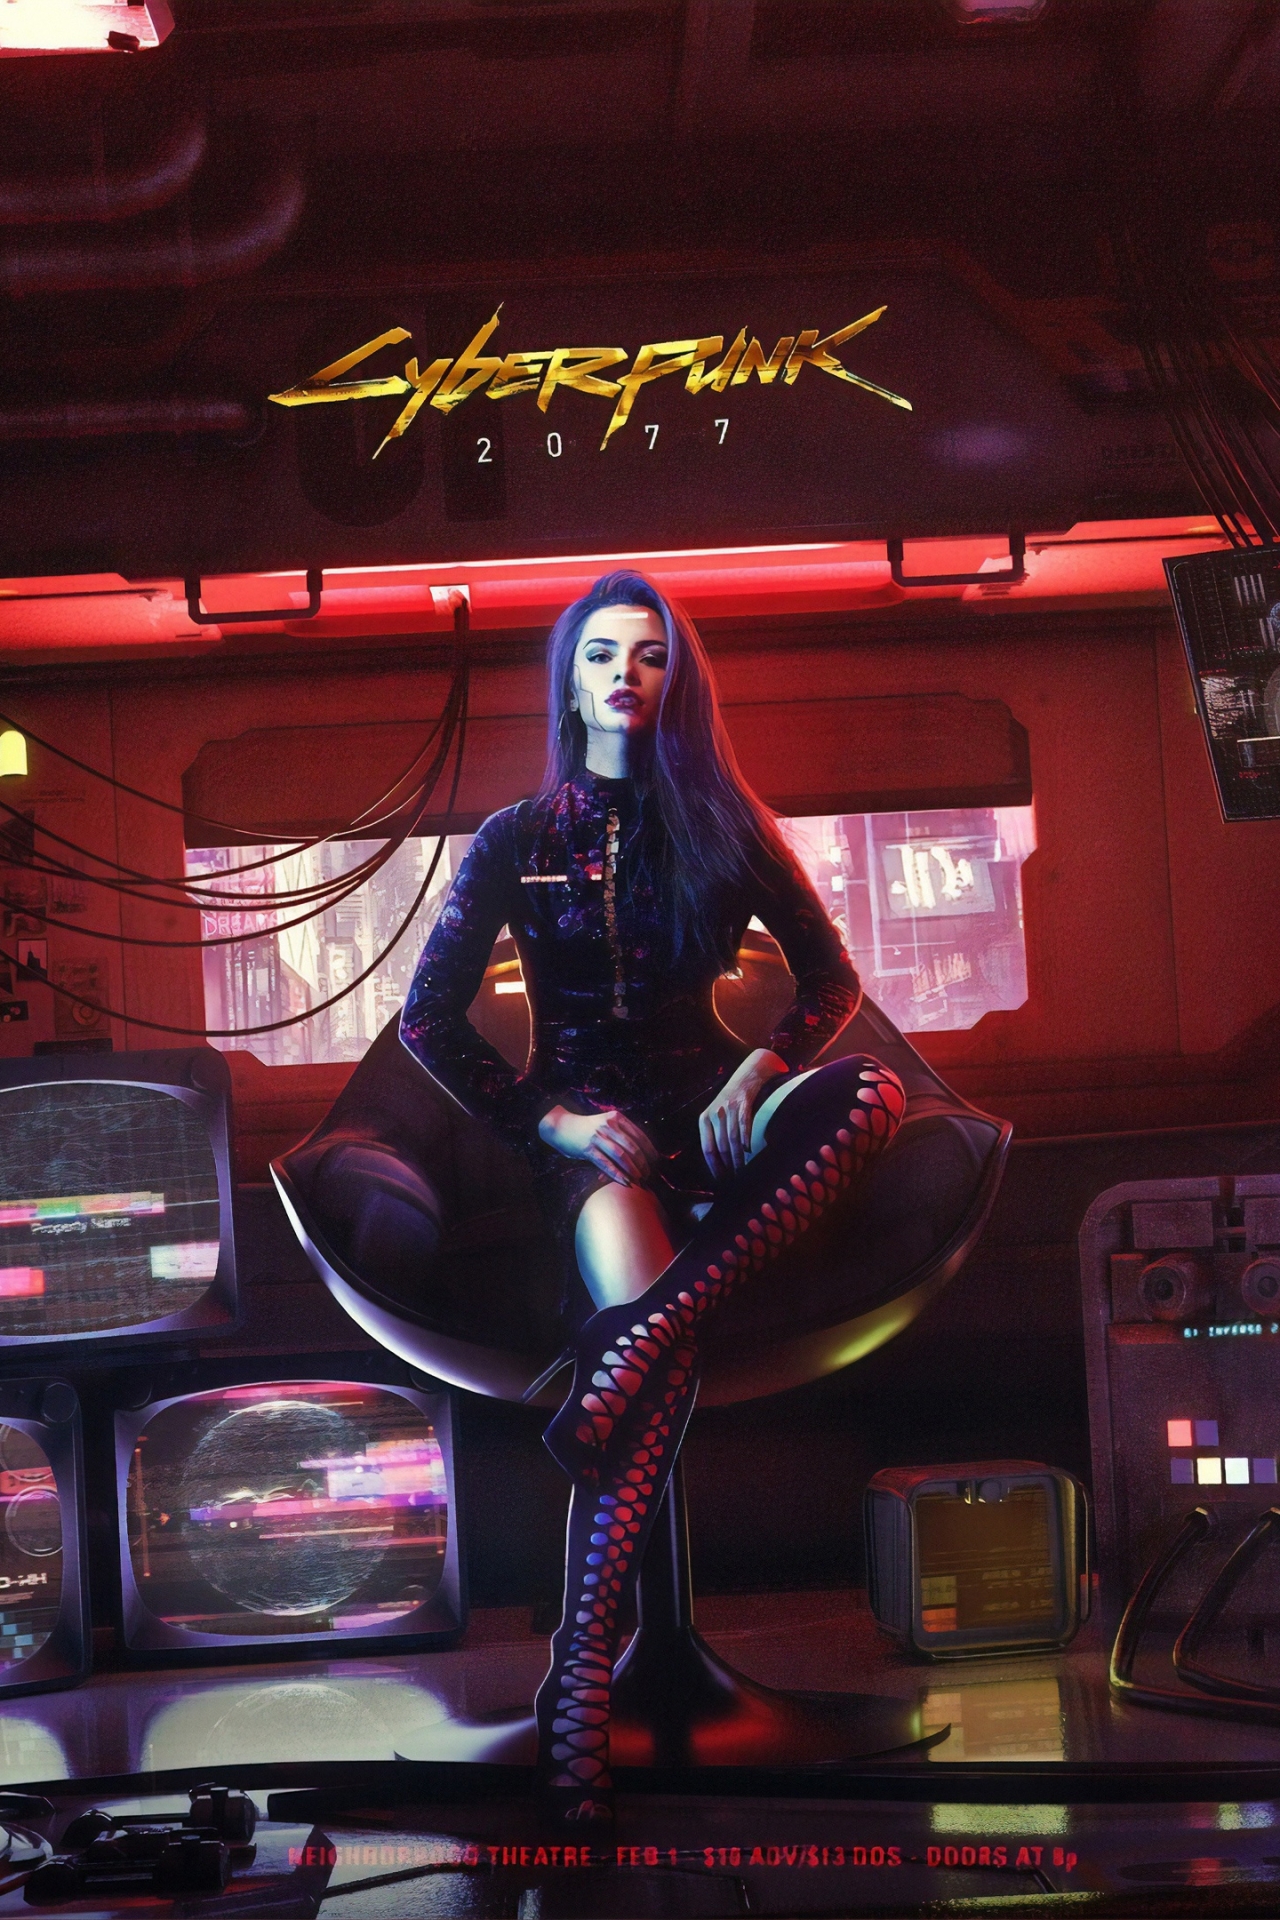 Cyberpunk 2077 Phone Wallpaper by JivoStudio - Mobile Abyss